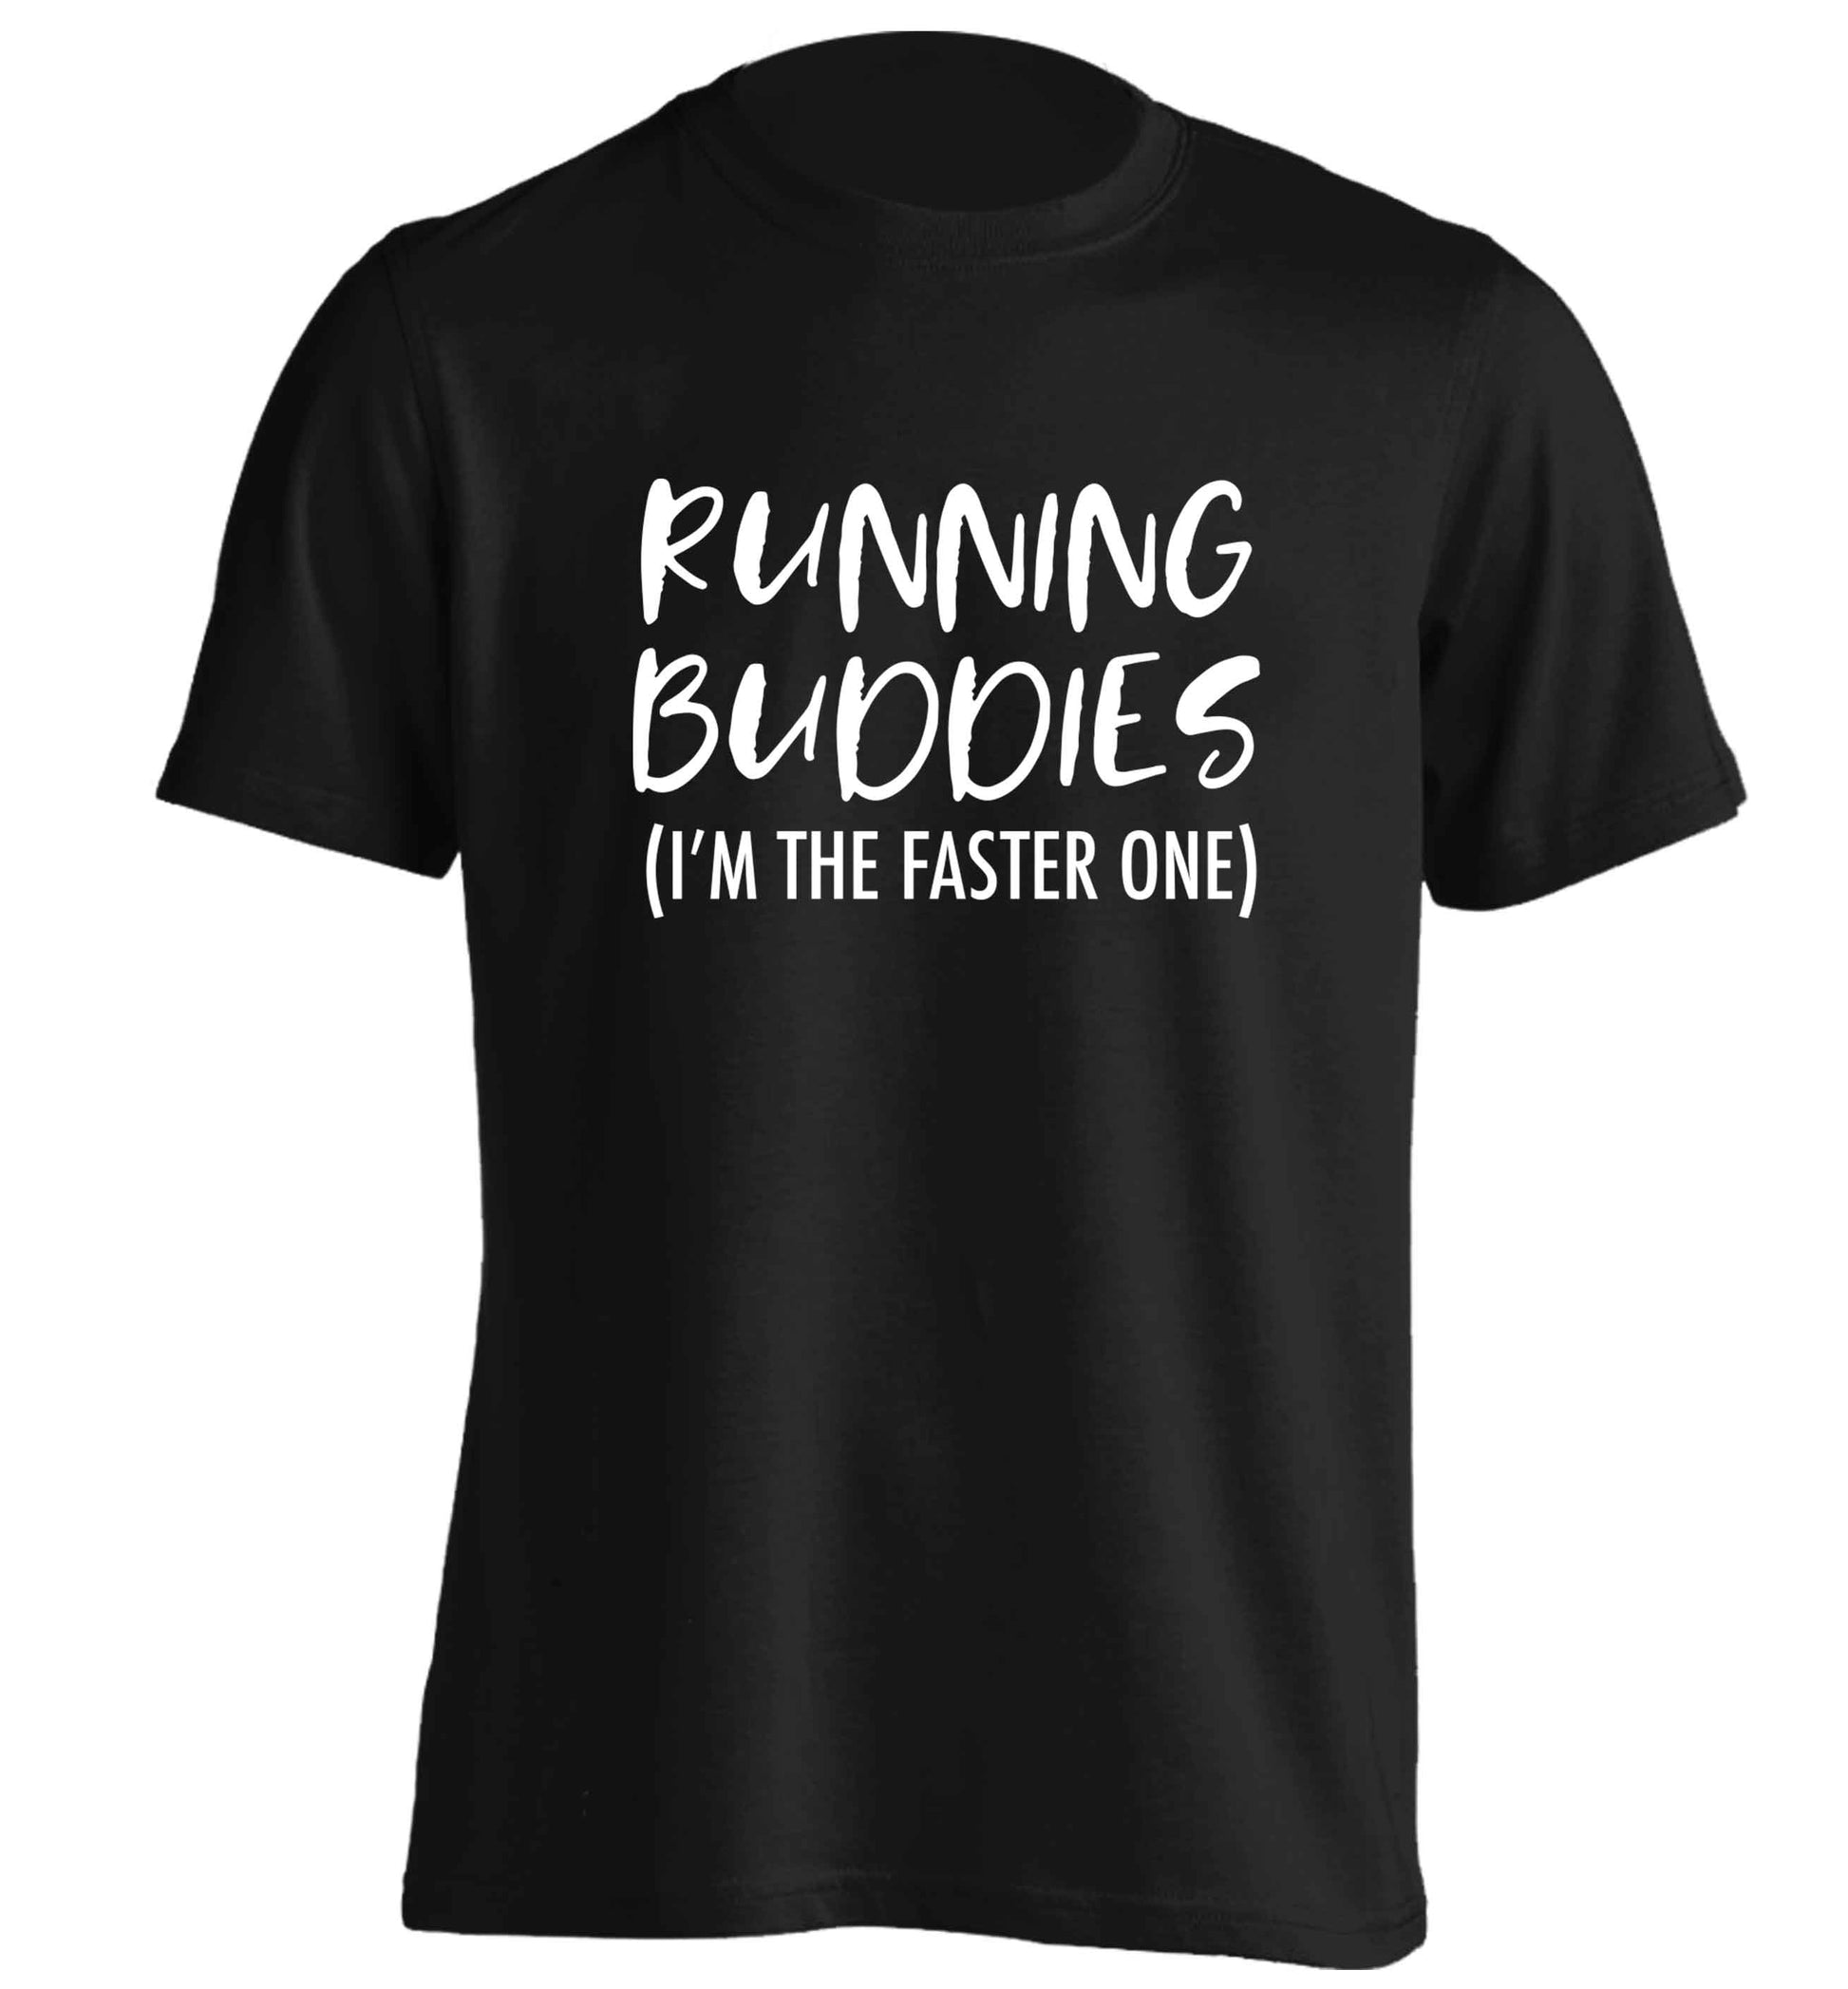 Running buddies (I'm the faster one) adults unisex black Tshirt 2XL